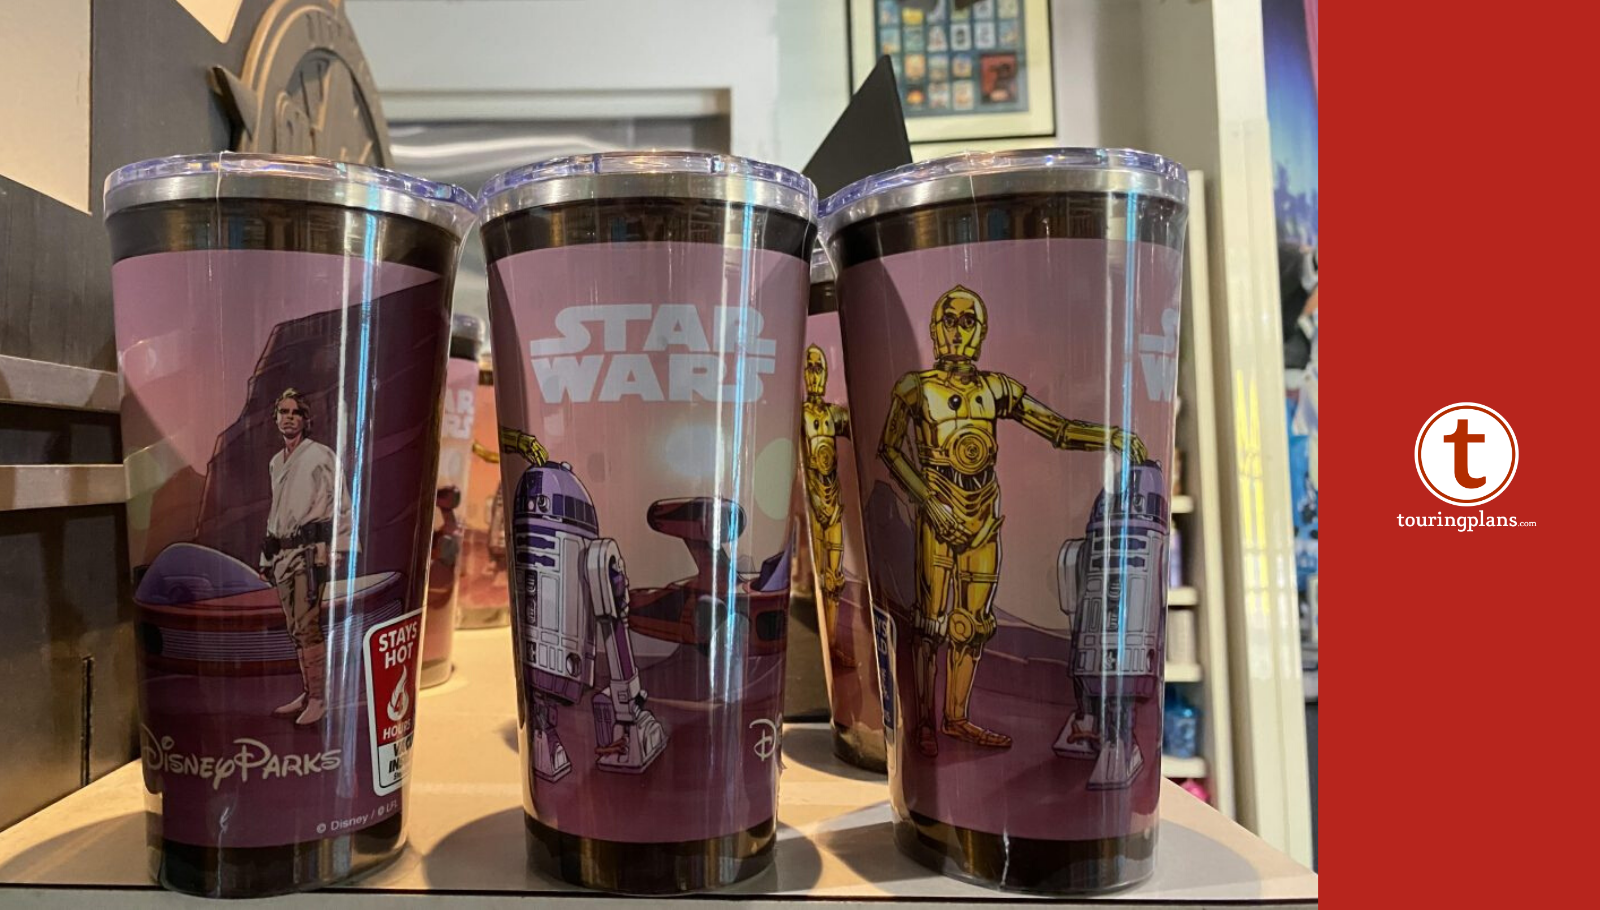 Disney Coffee Cup - Star Wars - C-3PO